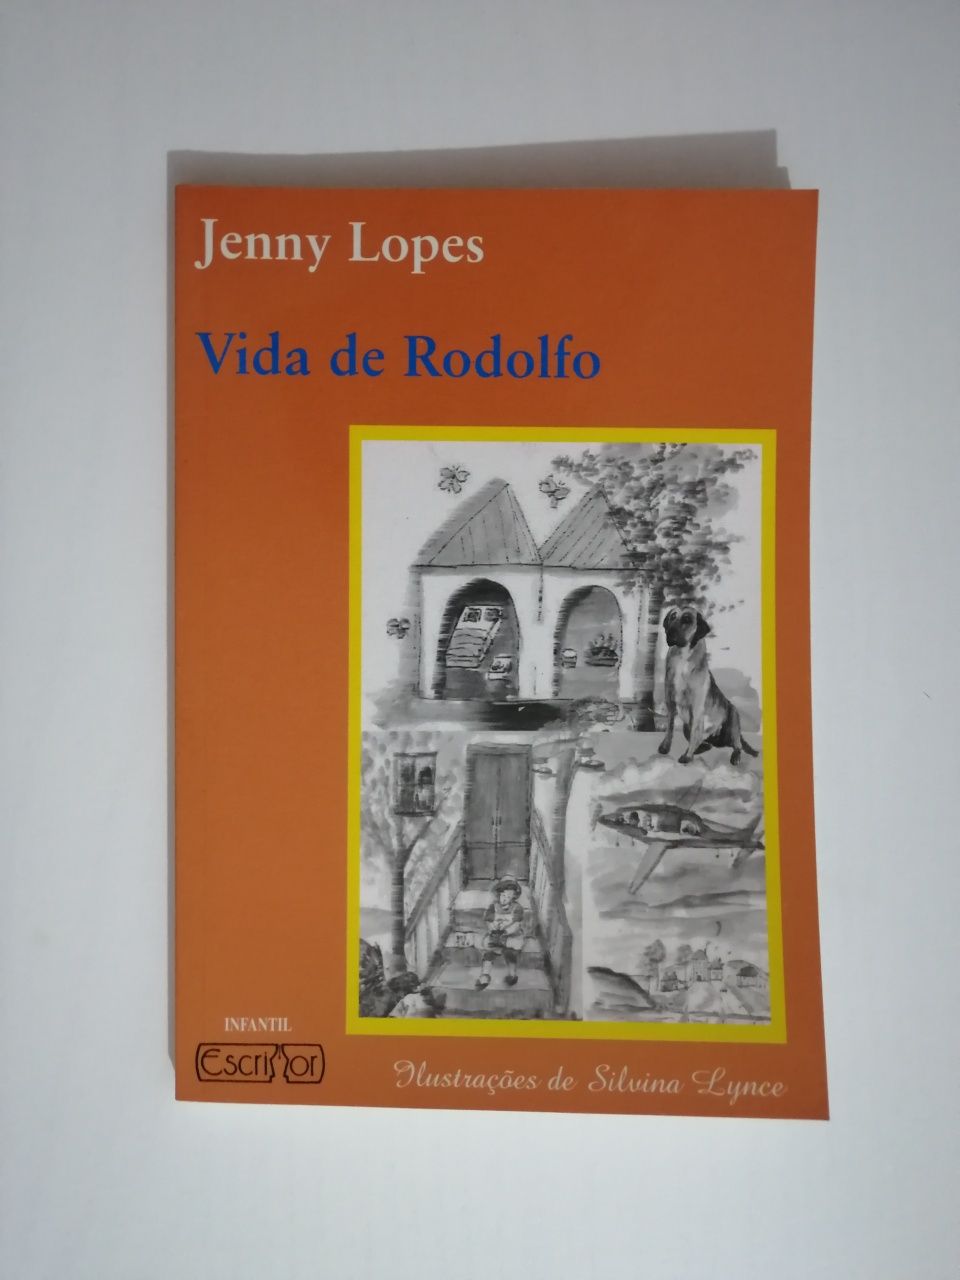 Livro: "Afluentes" de Jenny Lopes